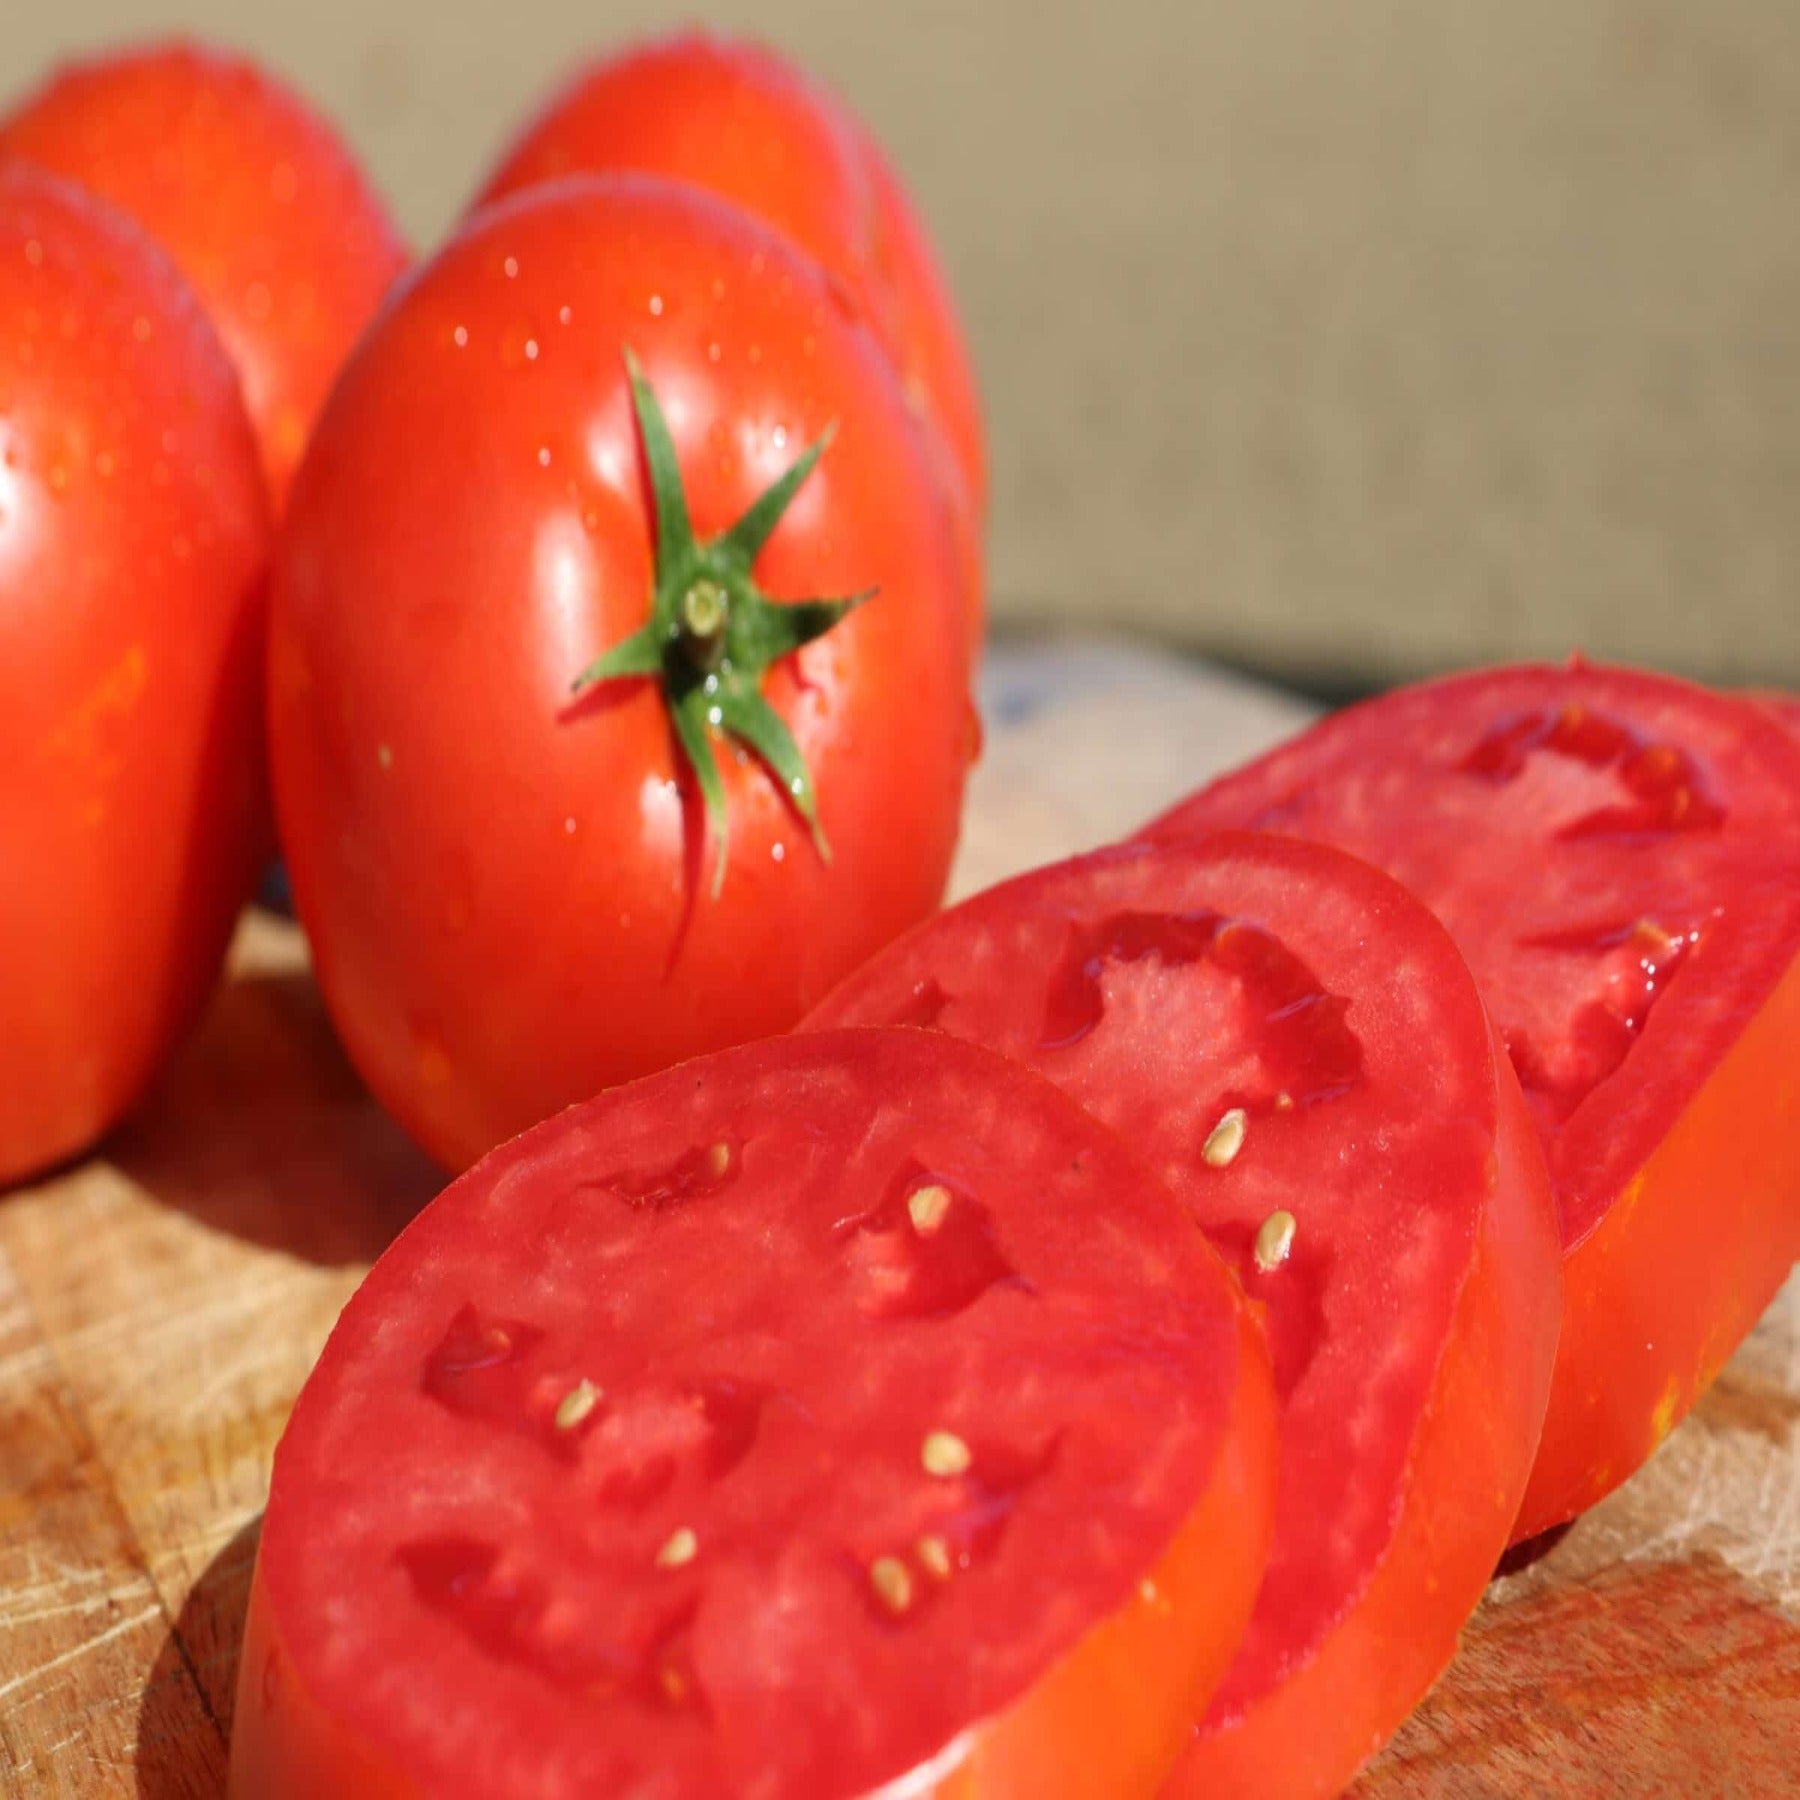 Big Beef PLUS Hybrid Tomato Seeds